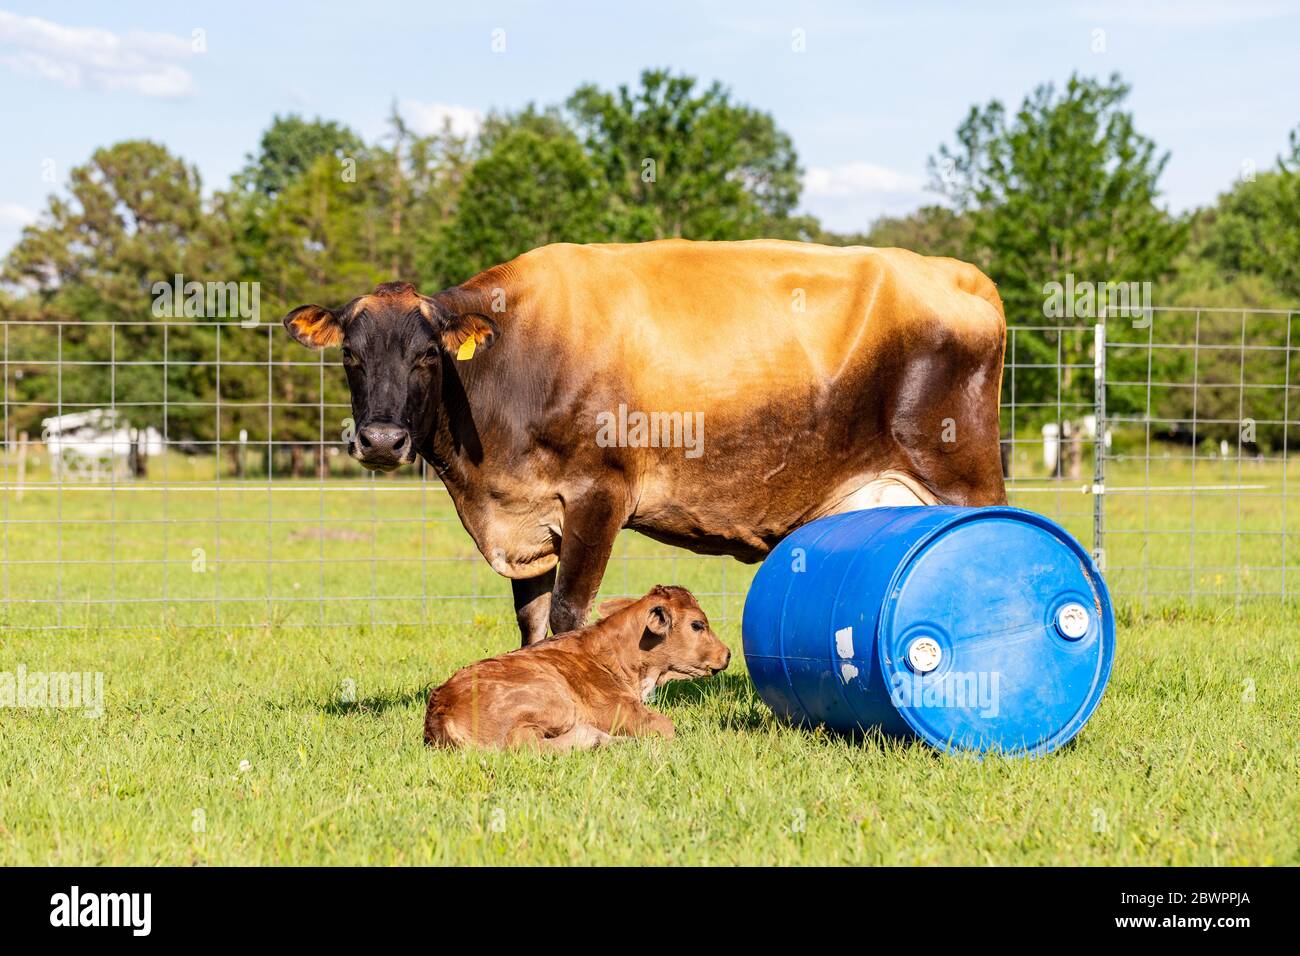 Jersey cow standing near her newborn calf in grass pasture Stock Photo